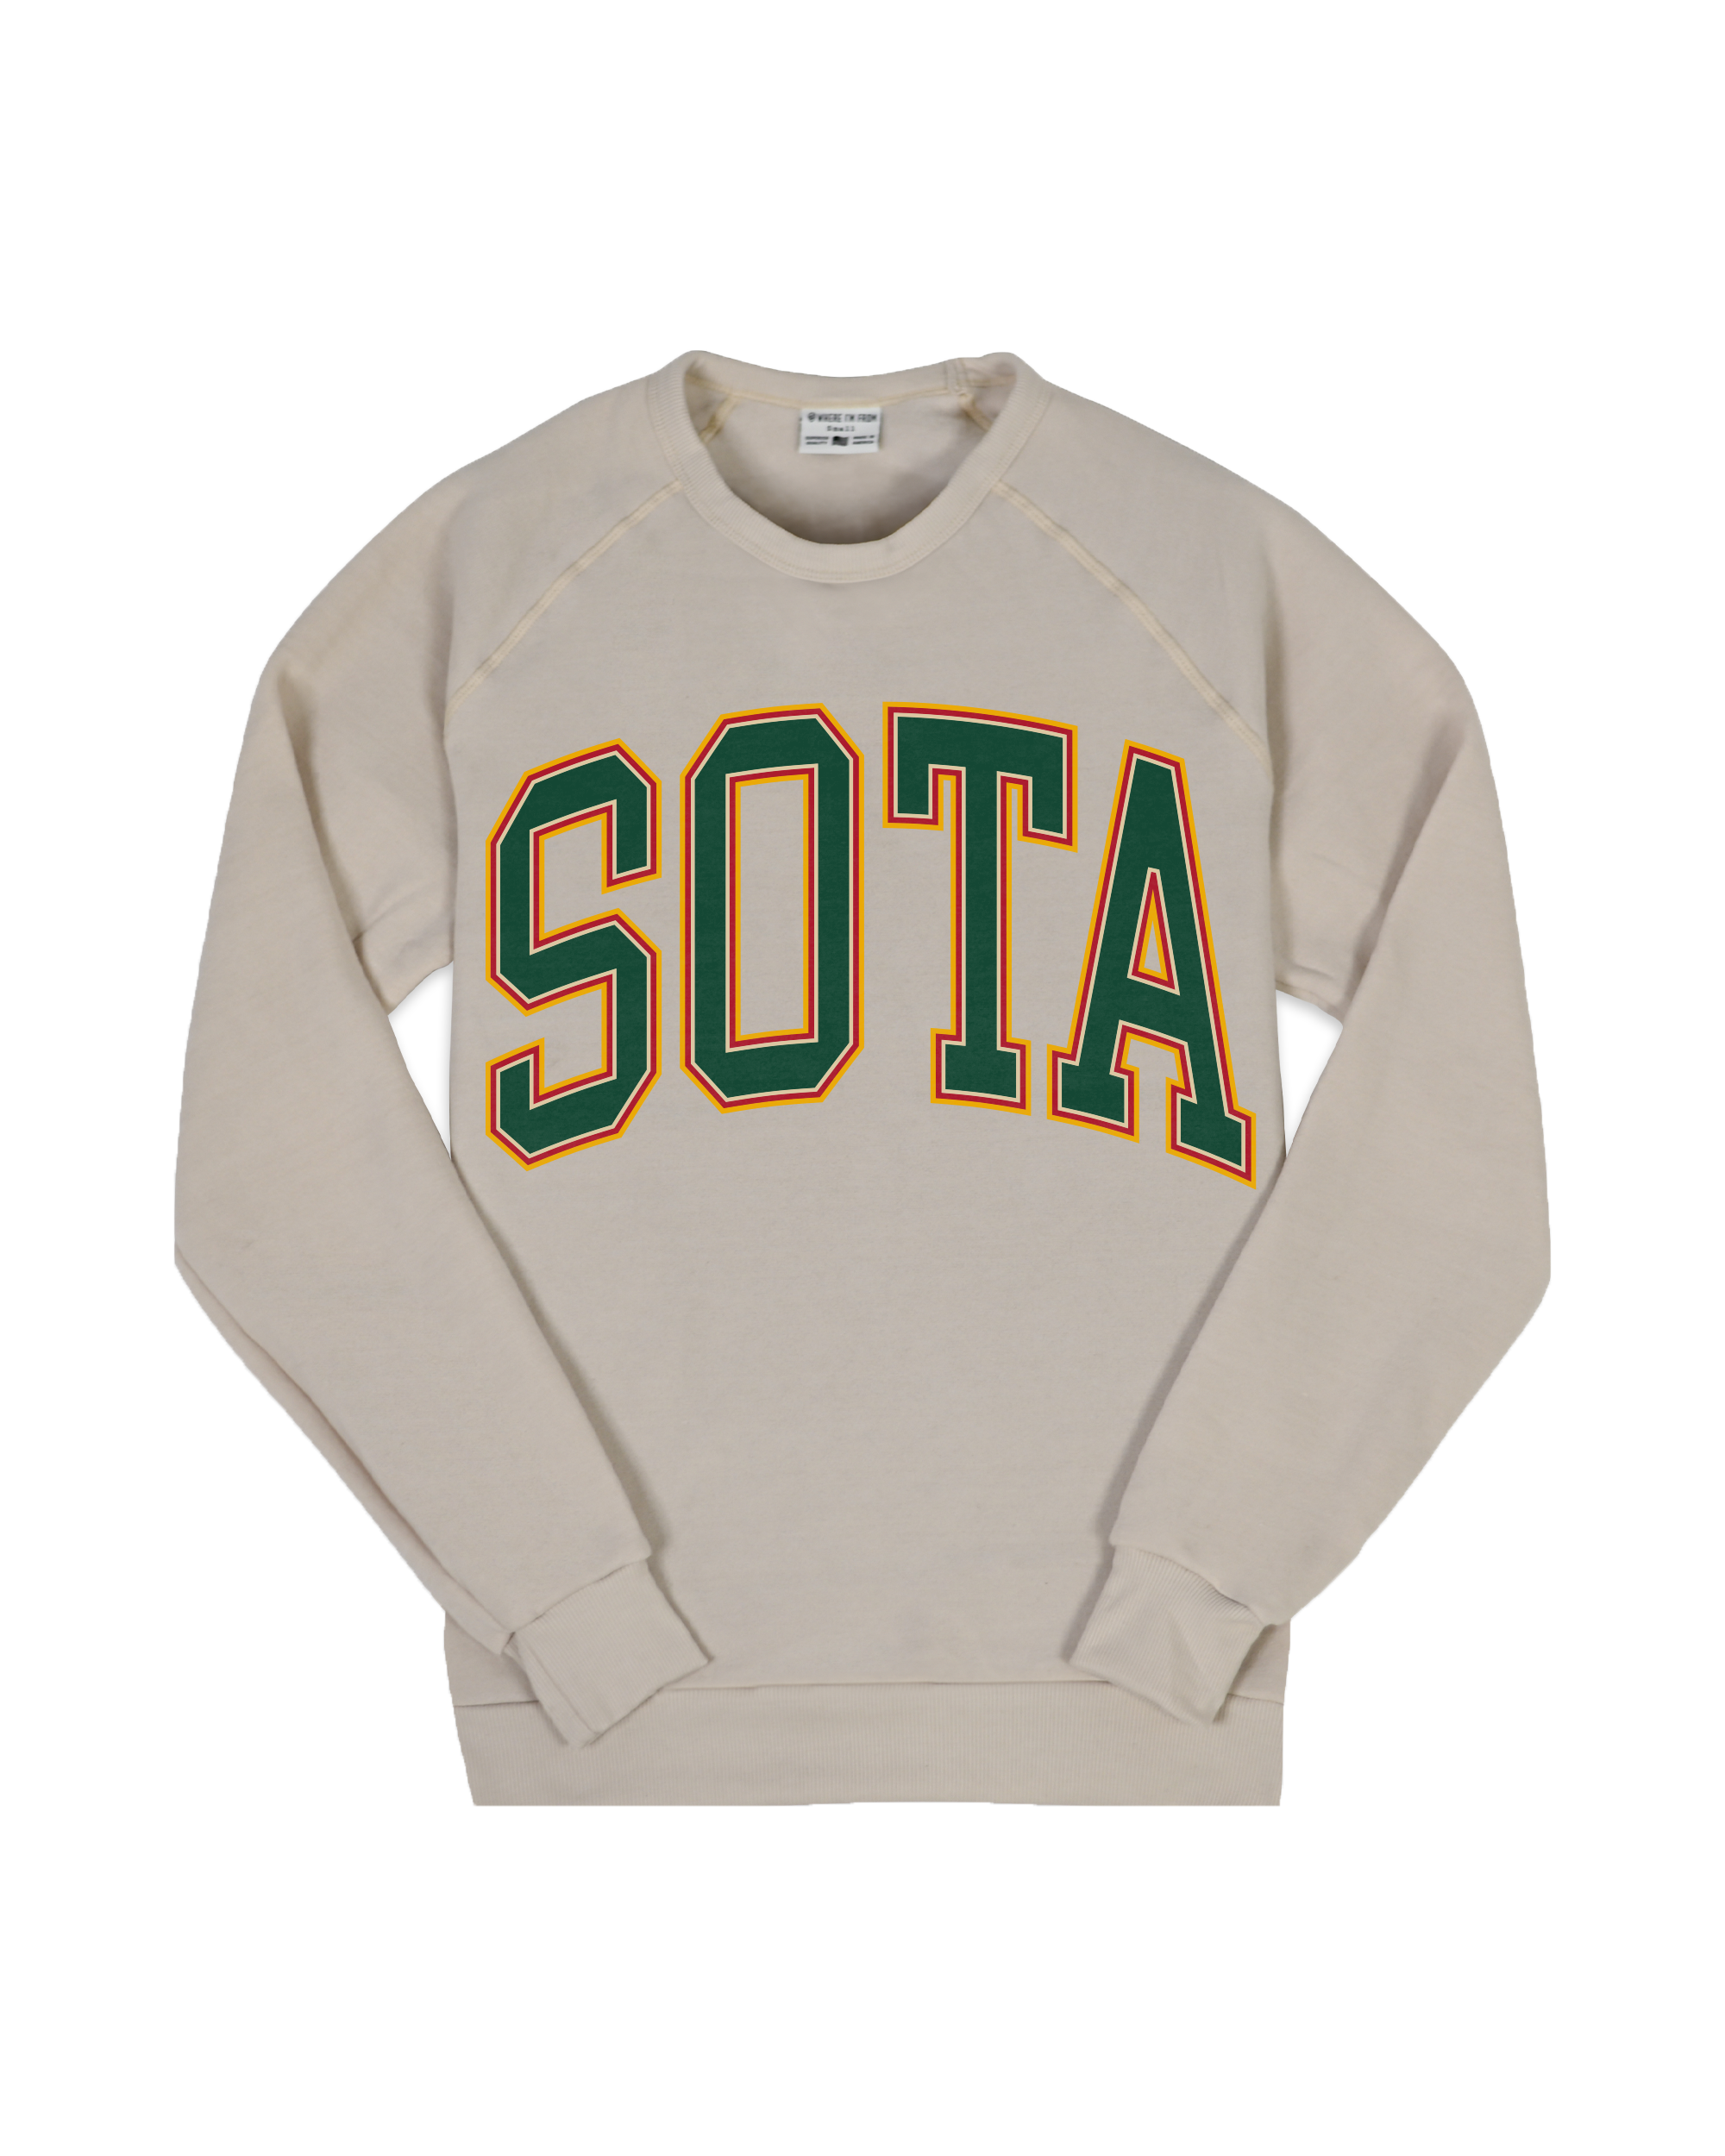 SOTA Arch Sweatshirt